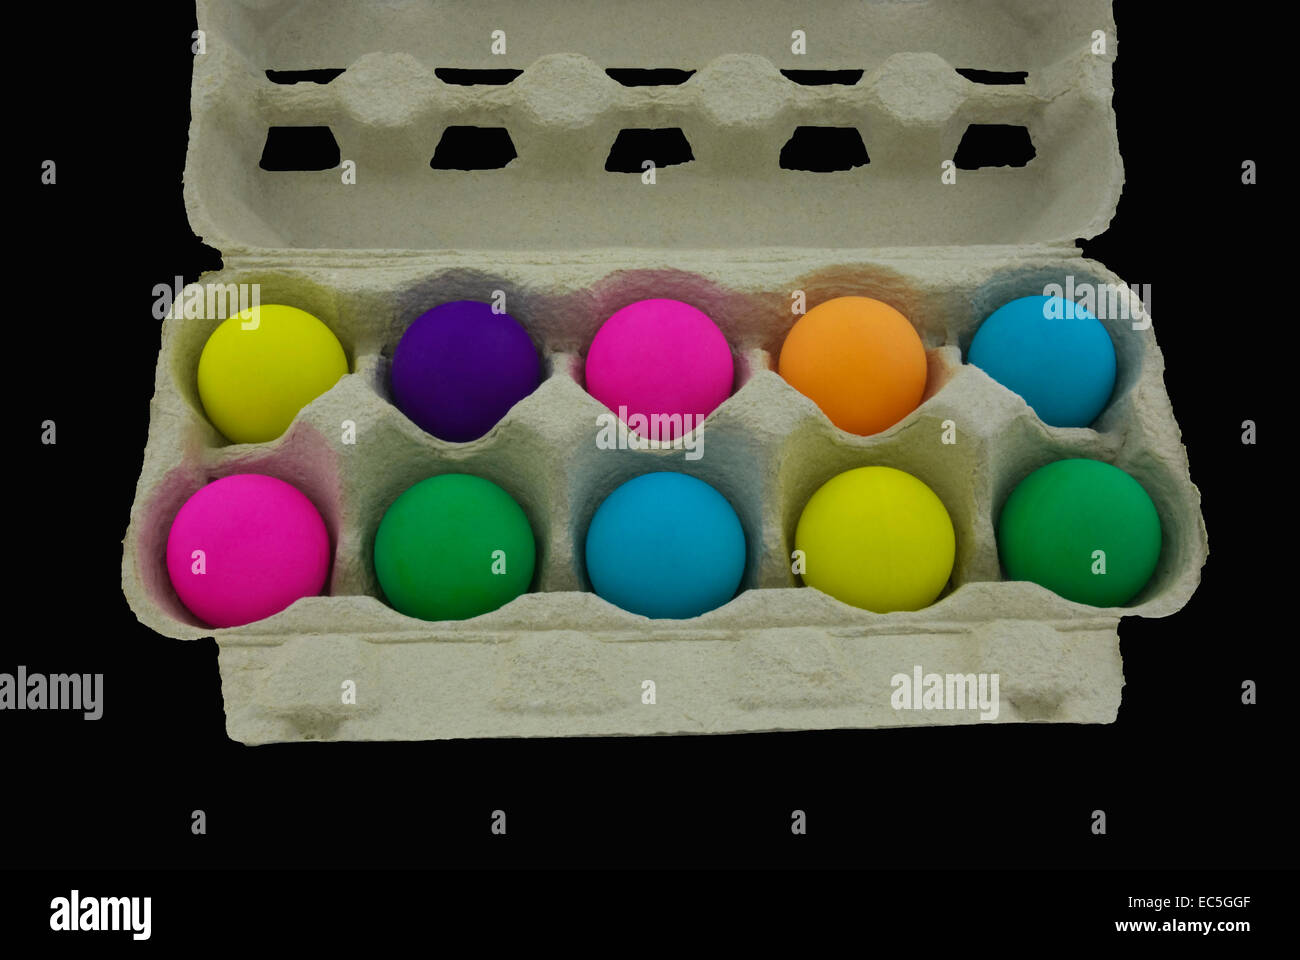 colorful table tennis balls in an egg carton Stock Photo - Alamy